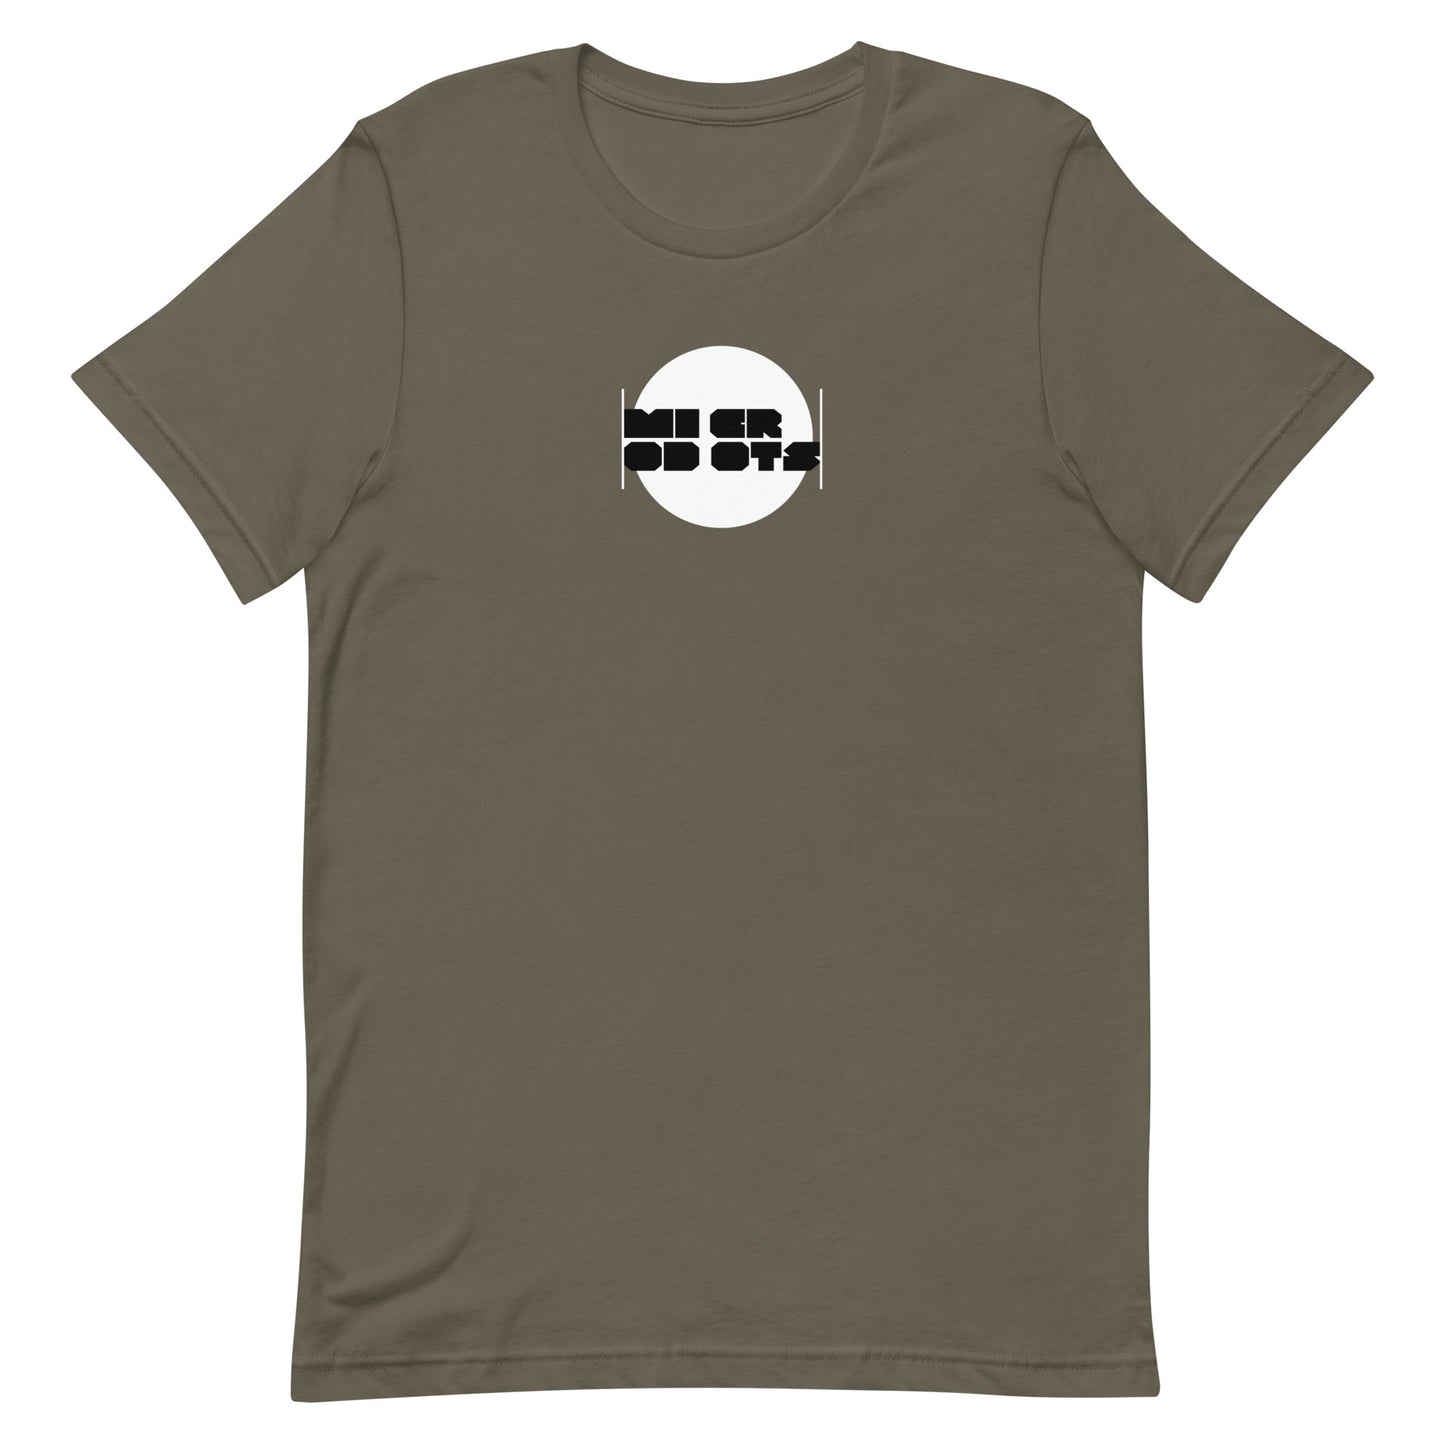 Microdots "Team Read Since 23" Design - Unisex t-shirt